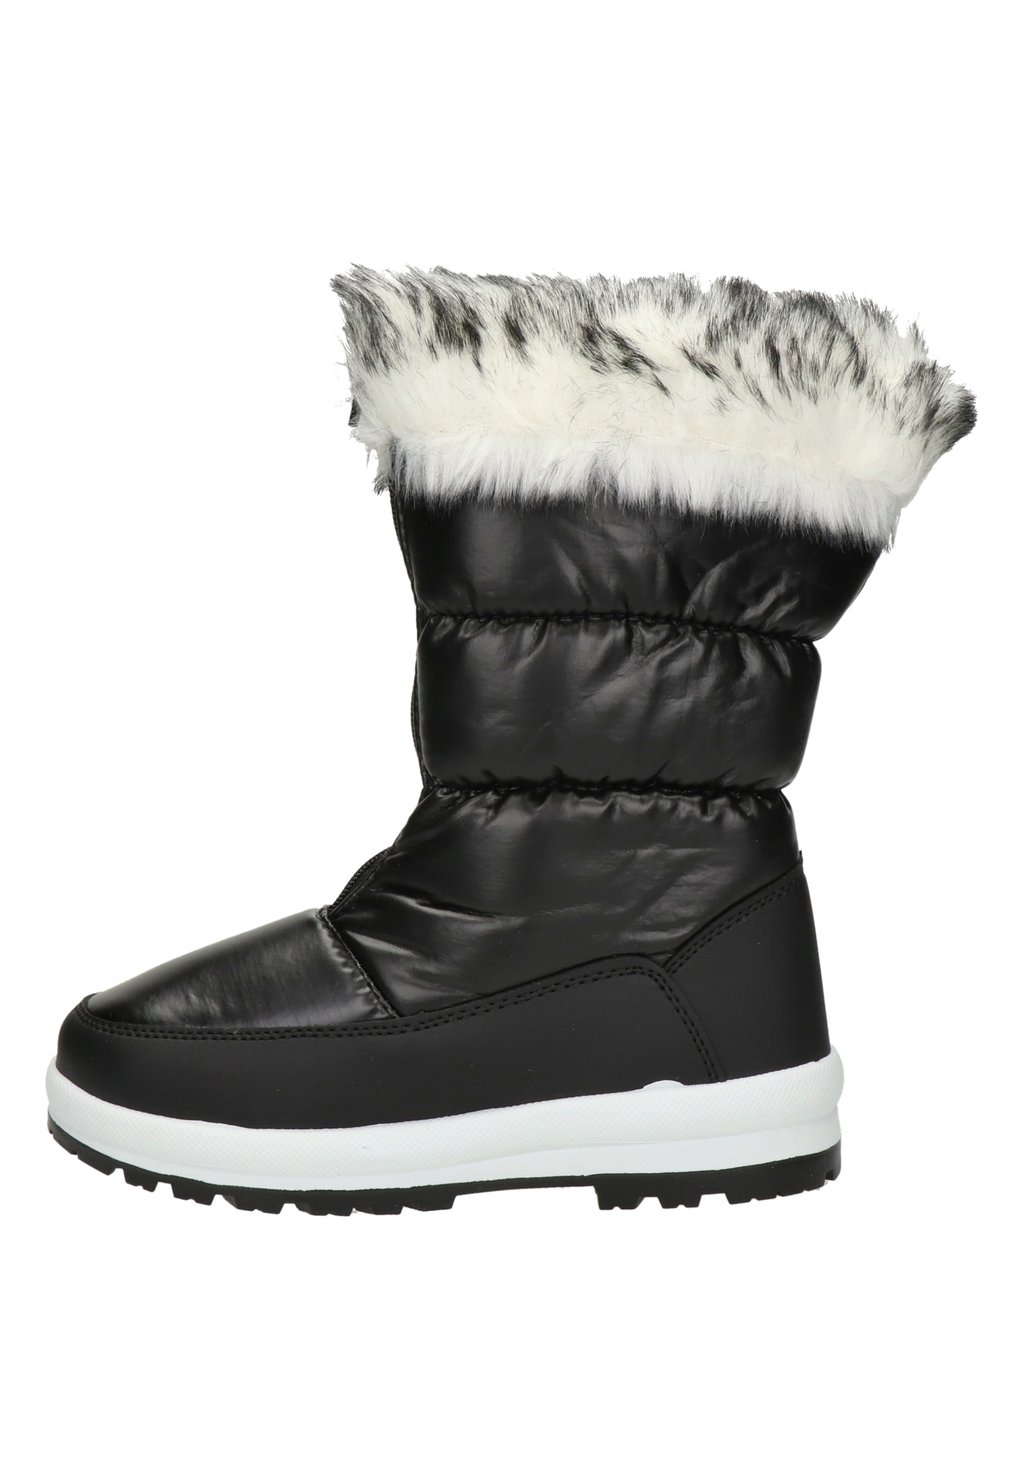 Зимние ботинки SNOW FUN Nelson, цвет zwart